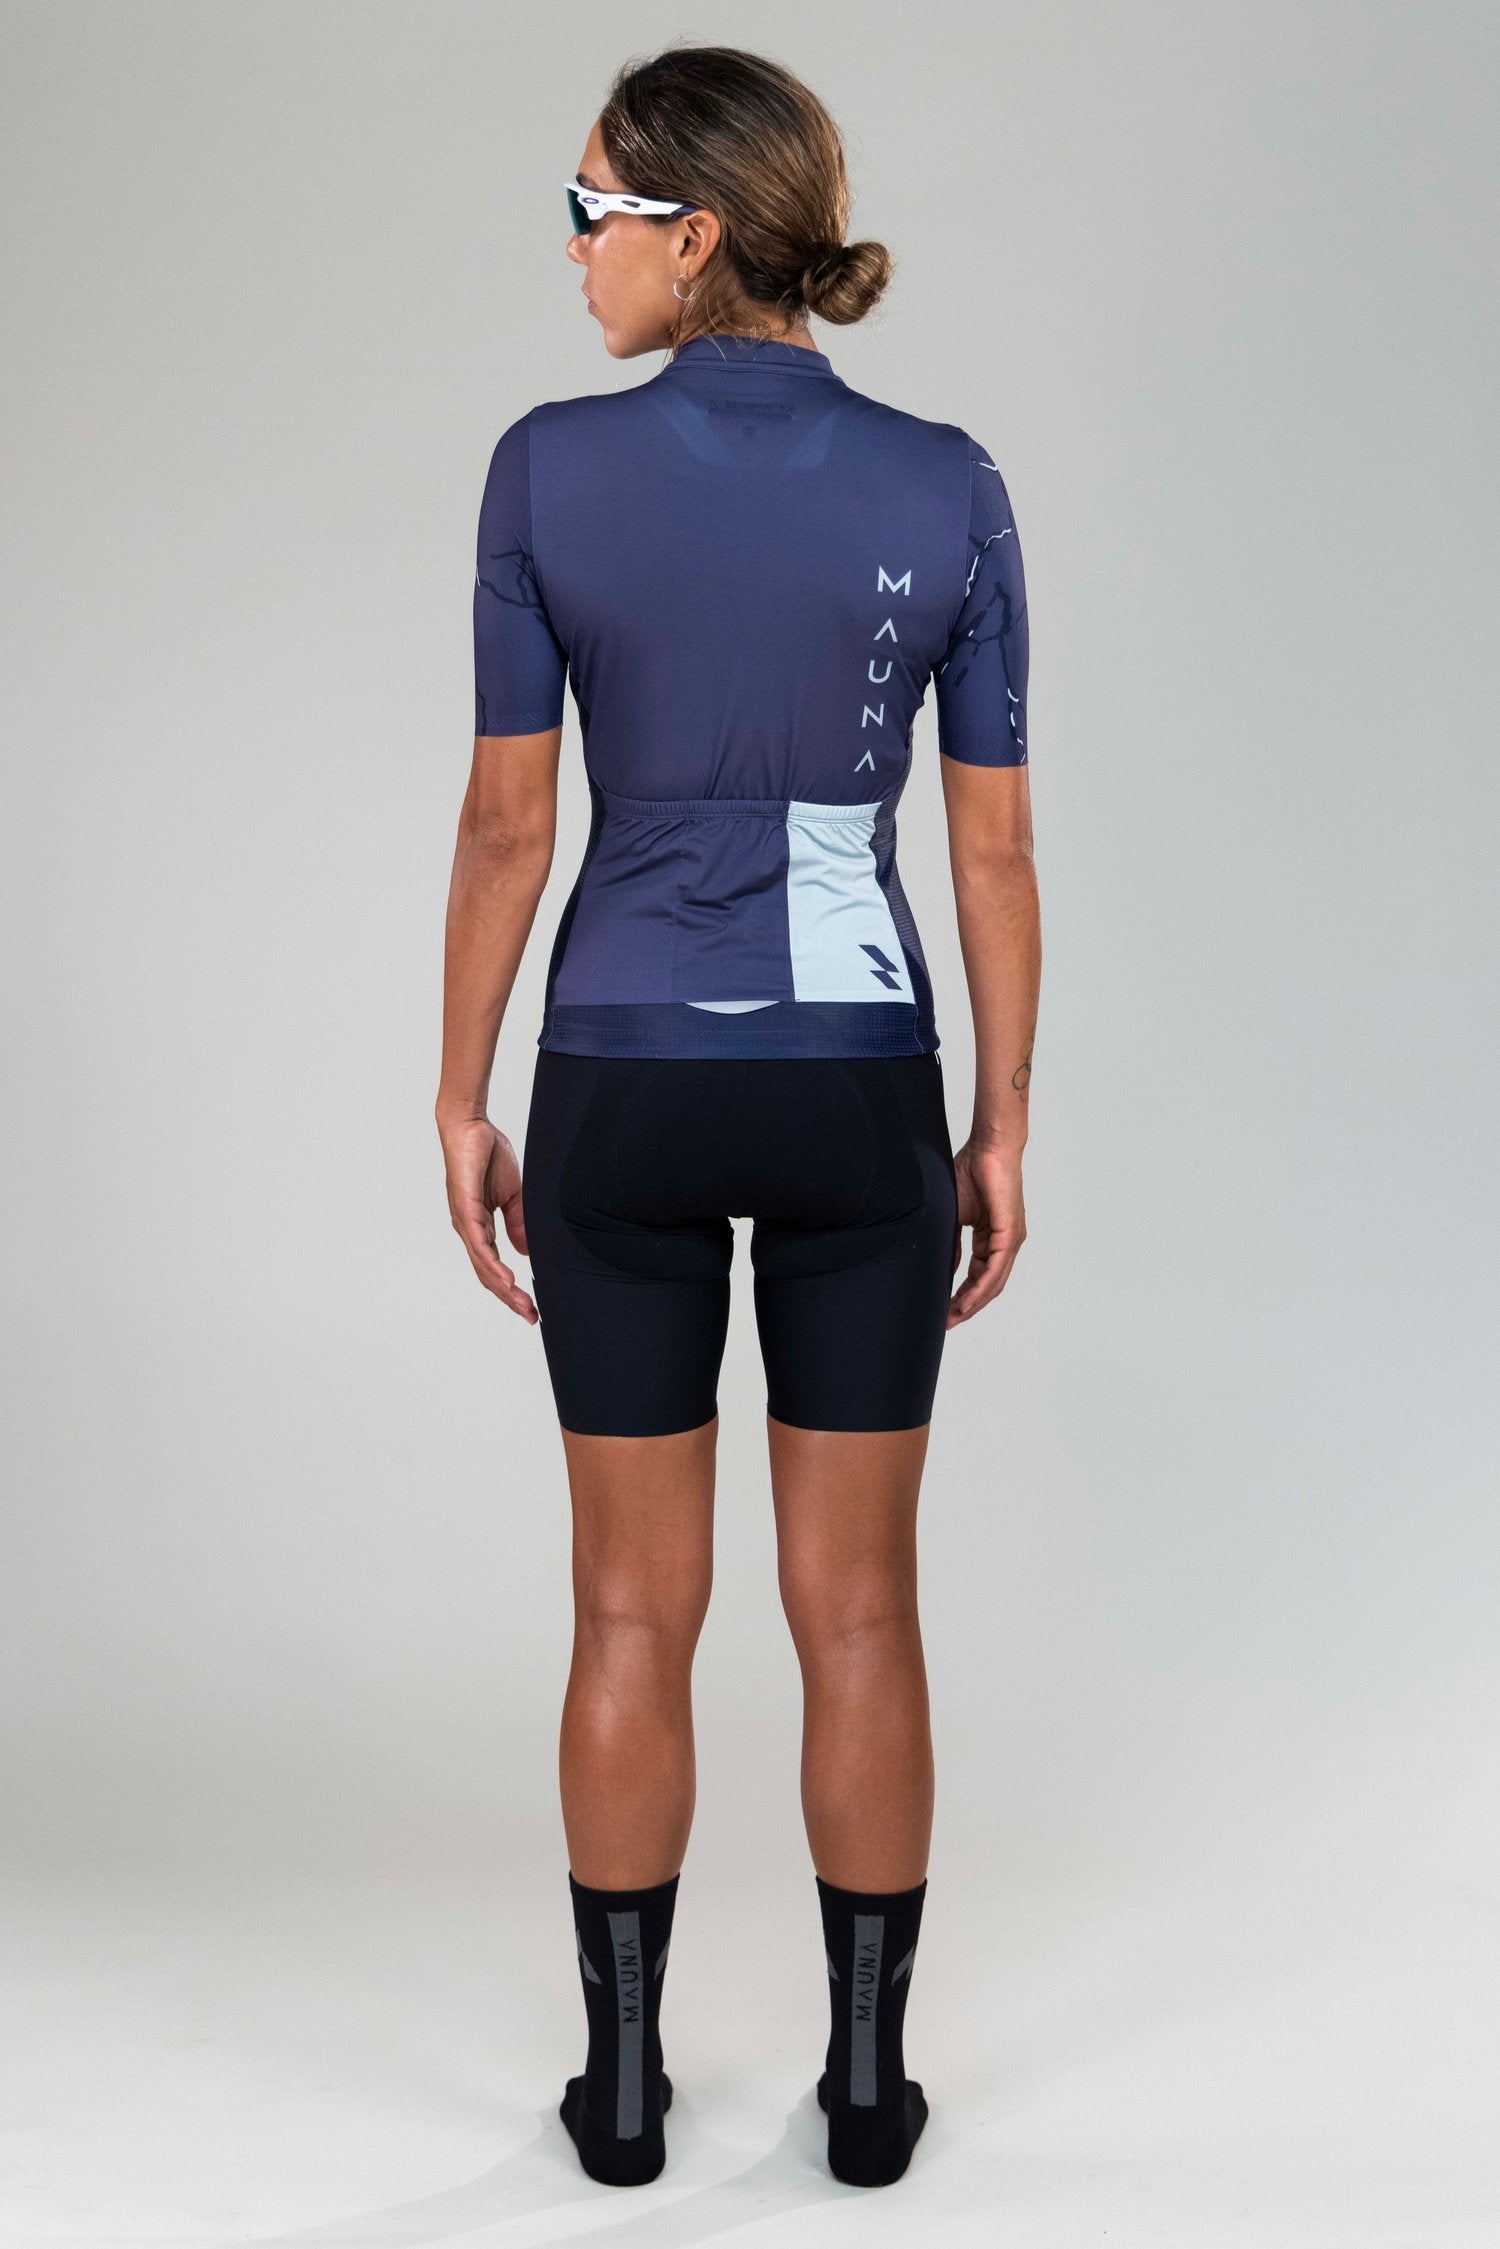 back full body view of woman wearing Eldhraun force cycling jersey